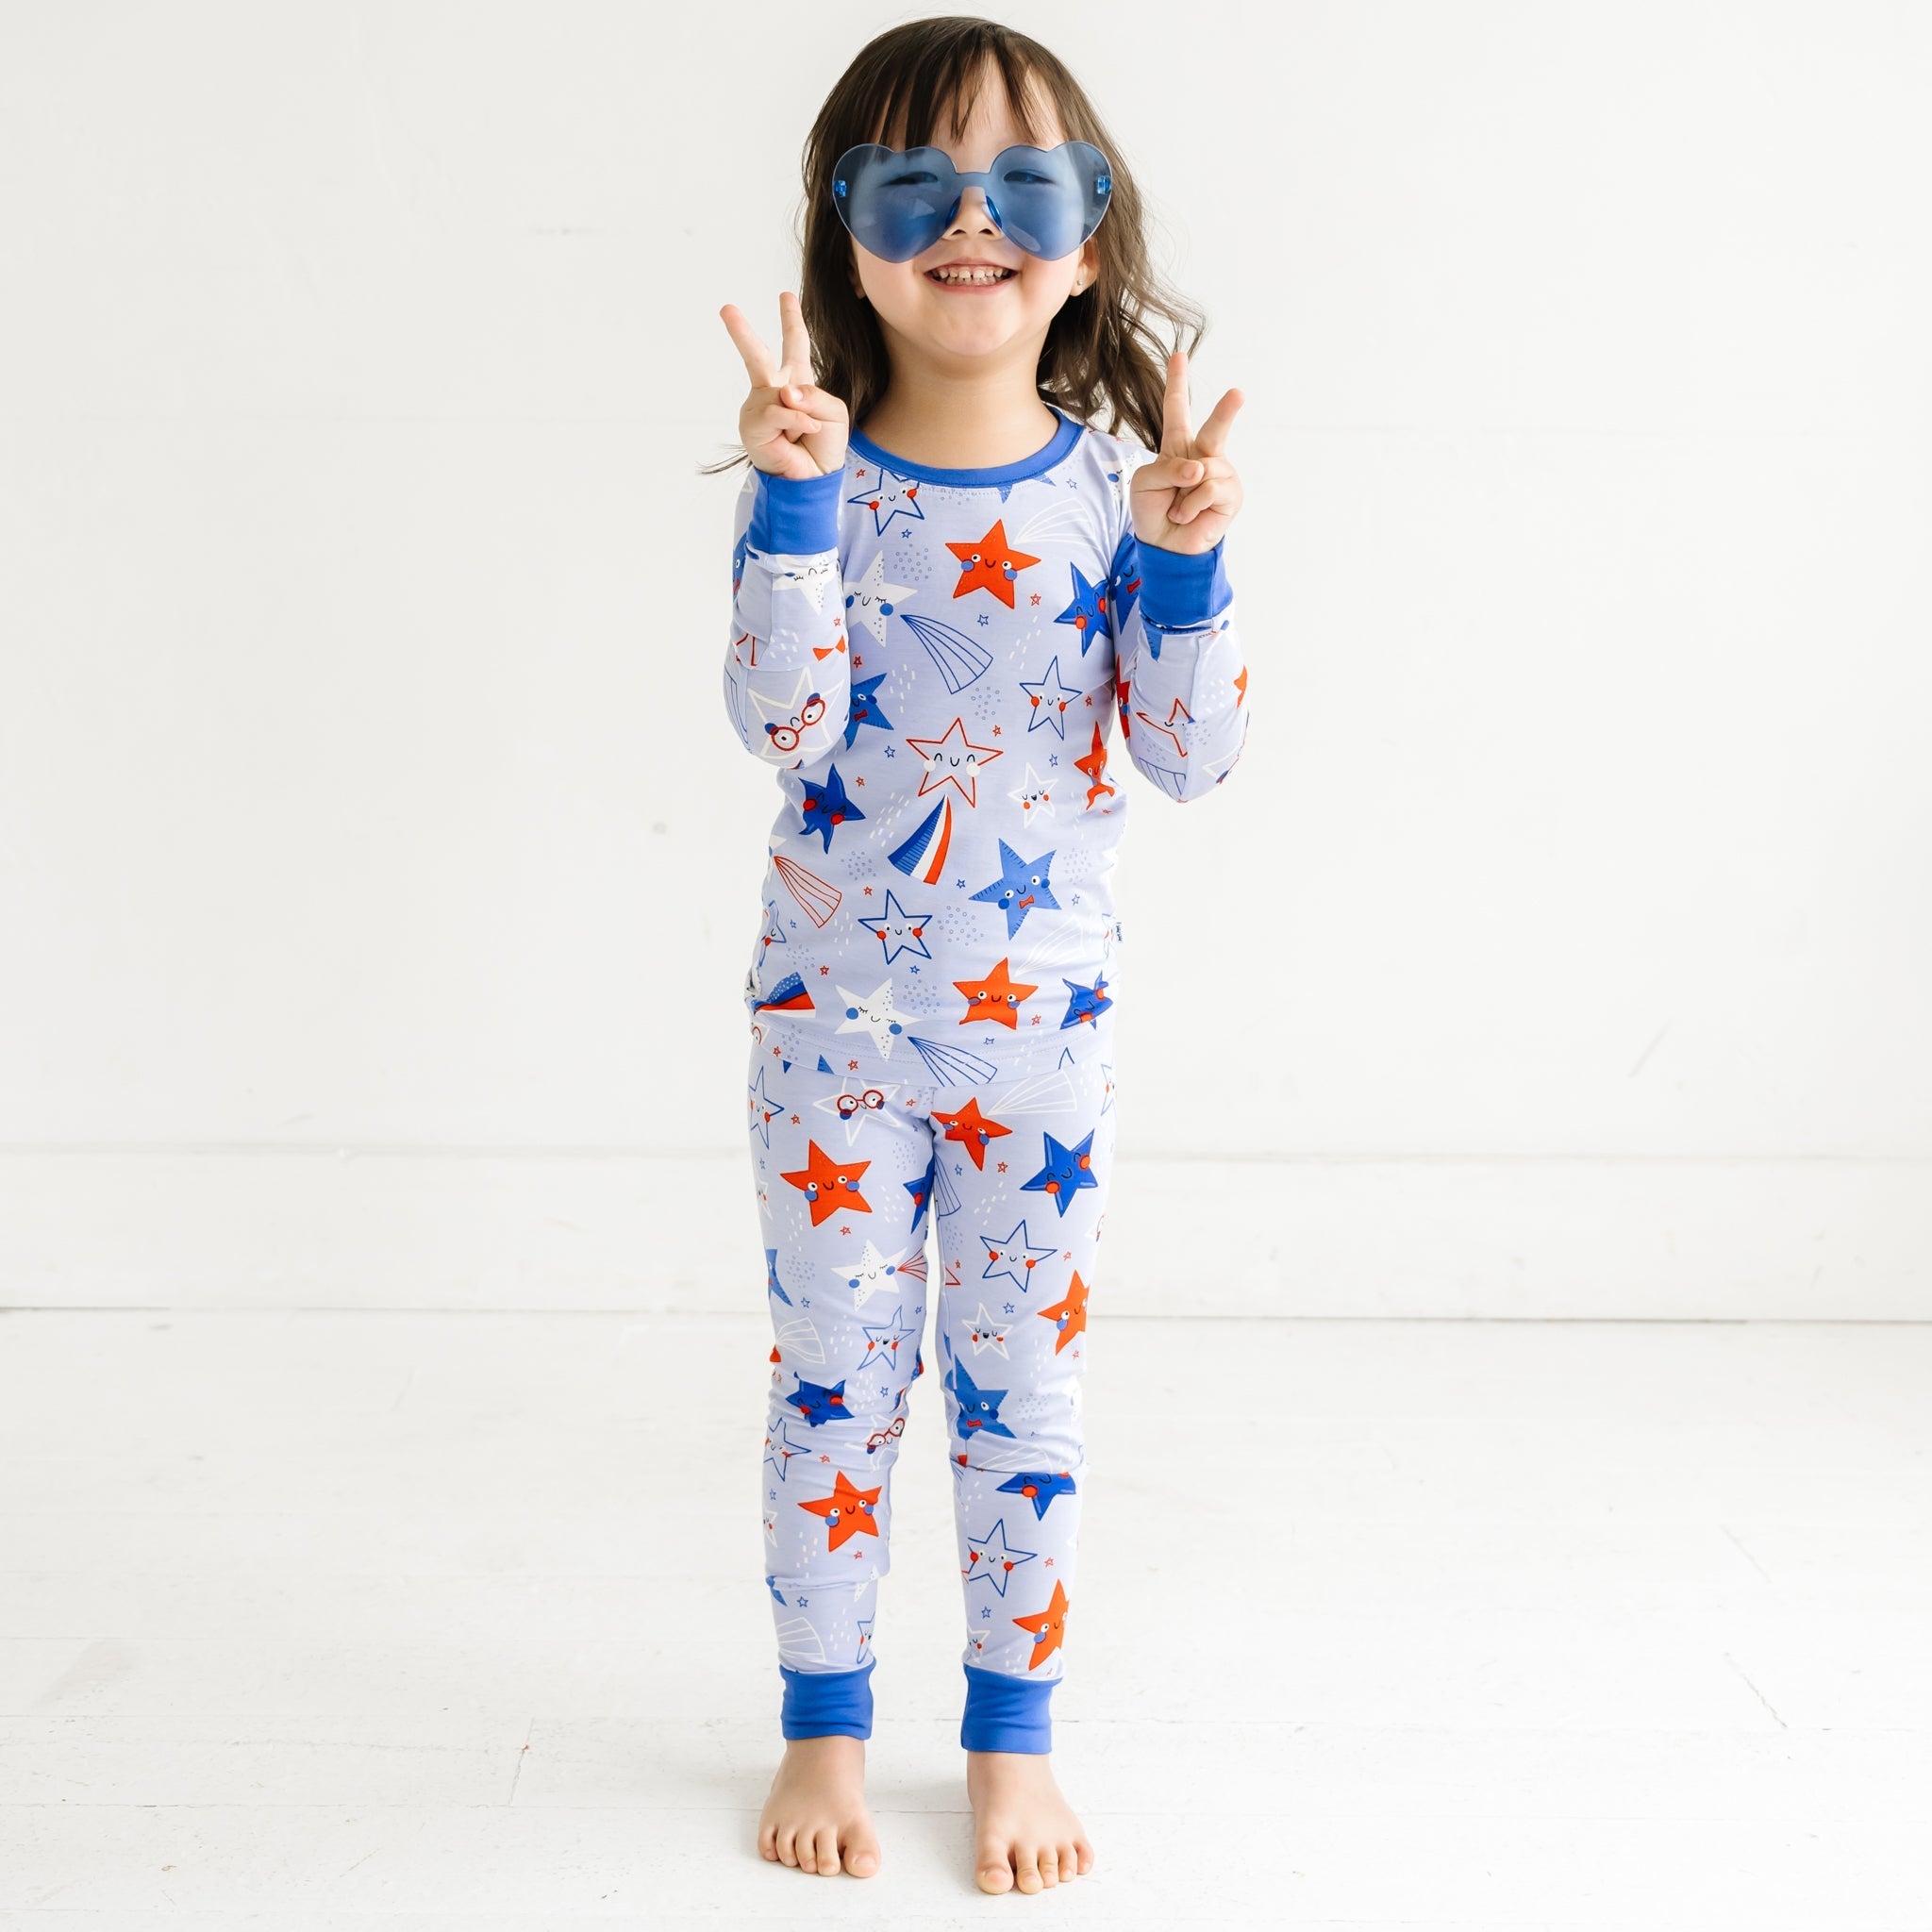 Sleep On It Big Girls 2-pc. Pajama Set, Color: Blue Floral Stripe - JCPenney